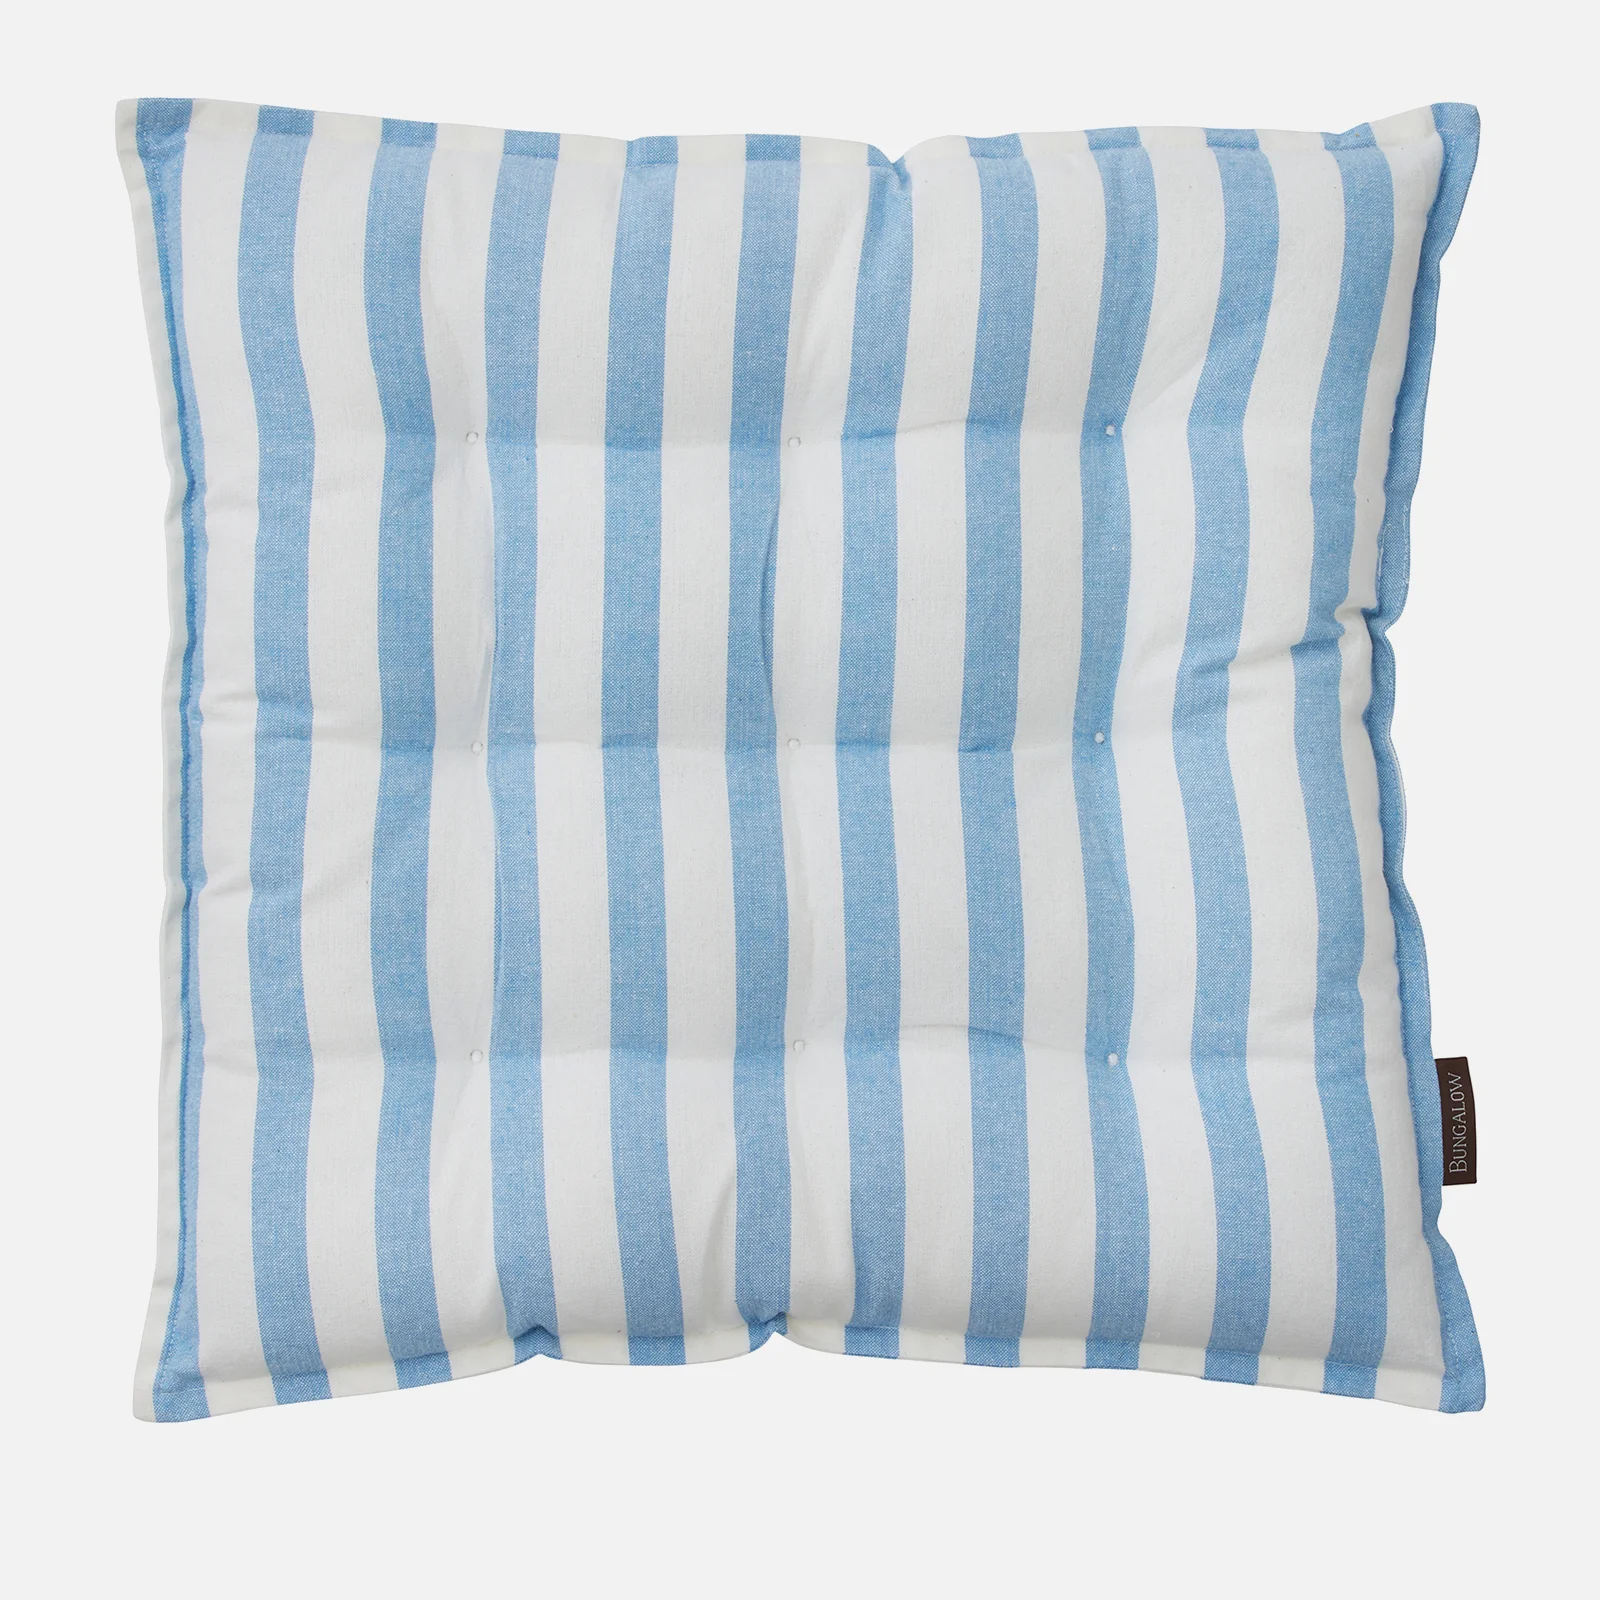 Bungalow Denmark Seat Cushion - Rimini Ocean Blue - 45 x 45cm Image 1